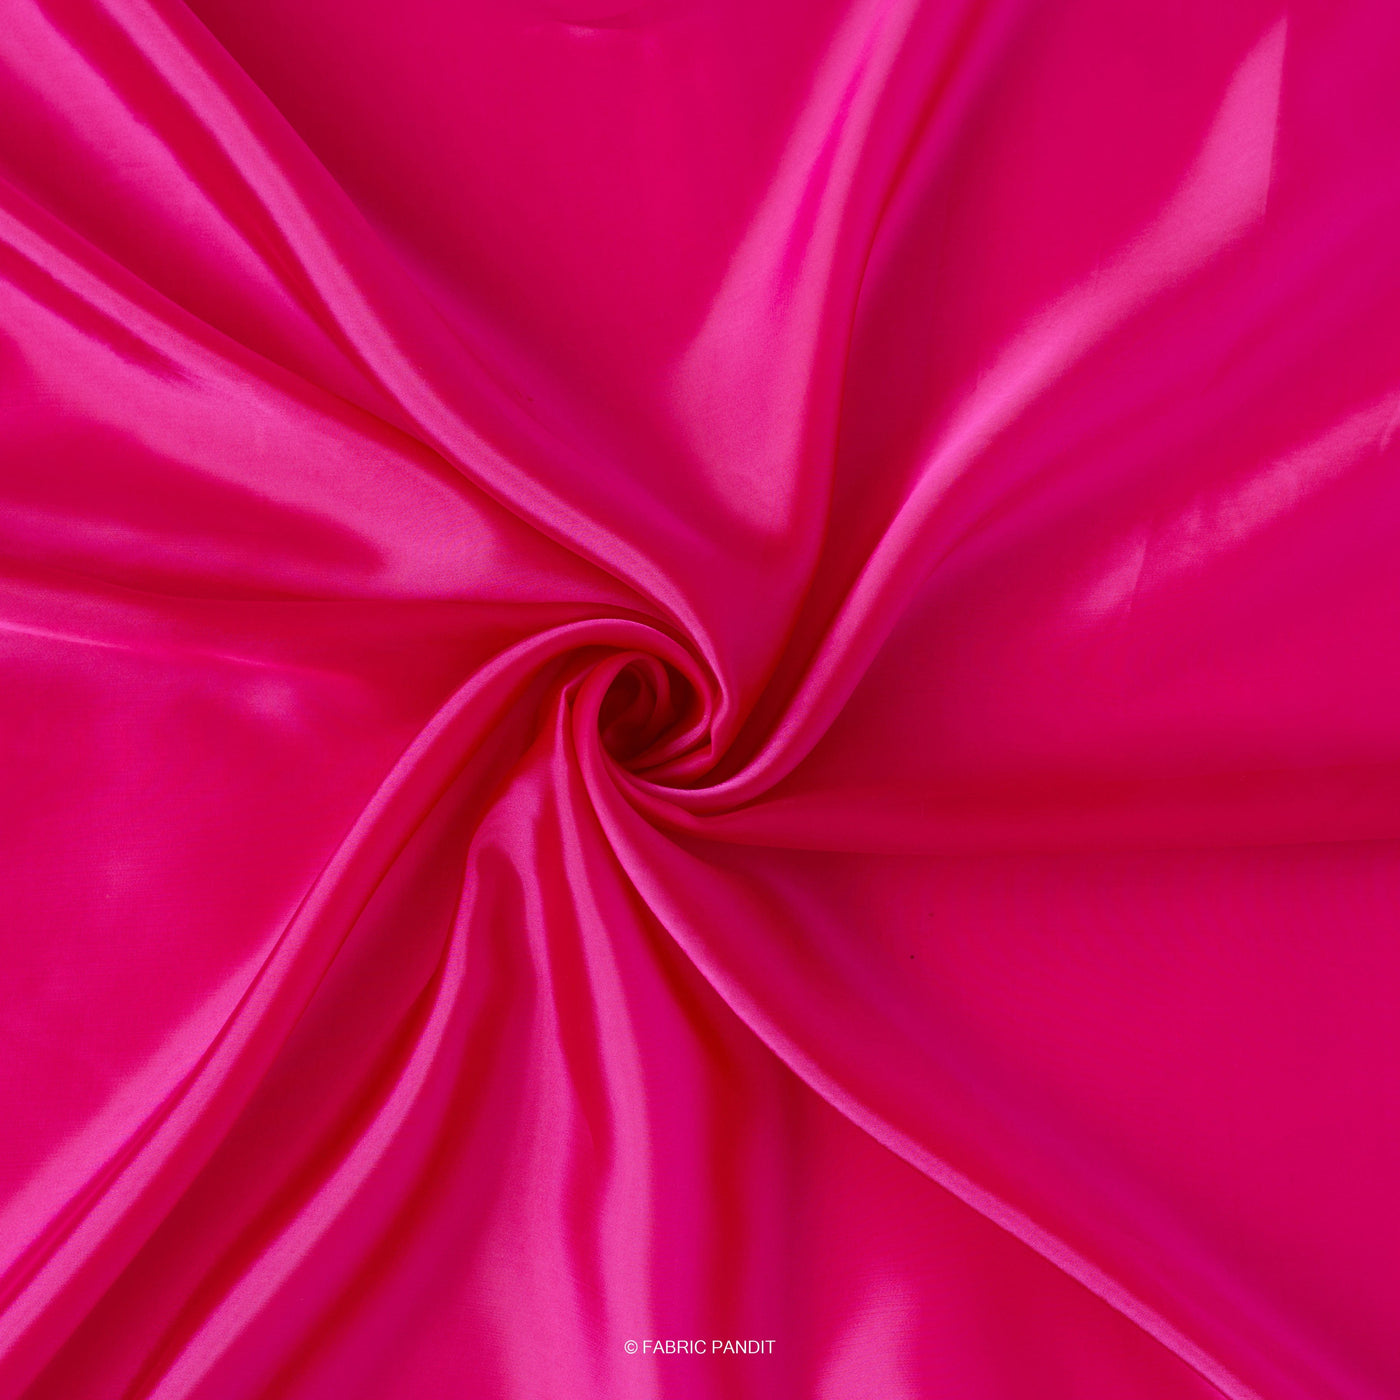 Fabric Pandit Fabric Deep Pink Plain Premium Organza Fabric (Width 44 Inches)